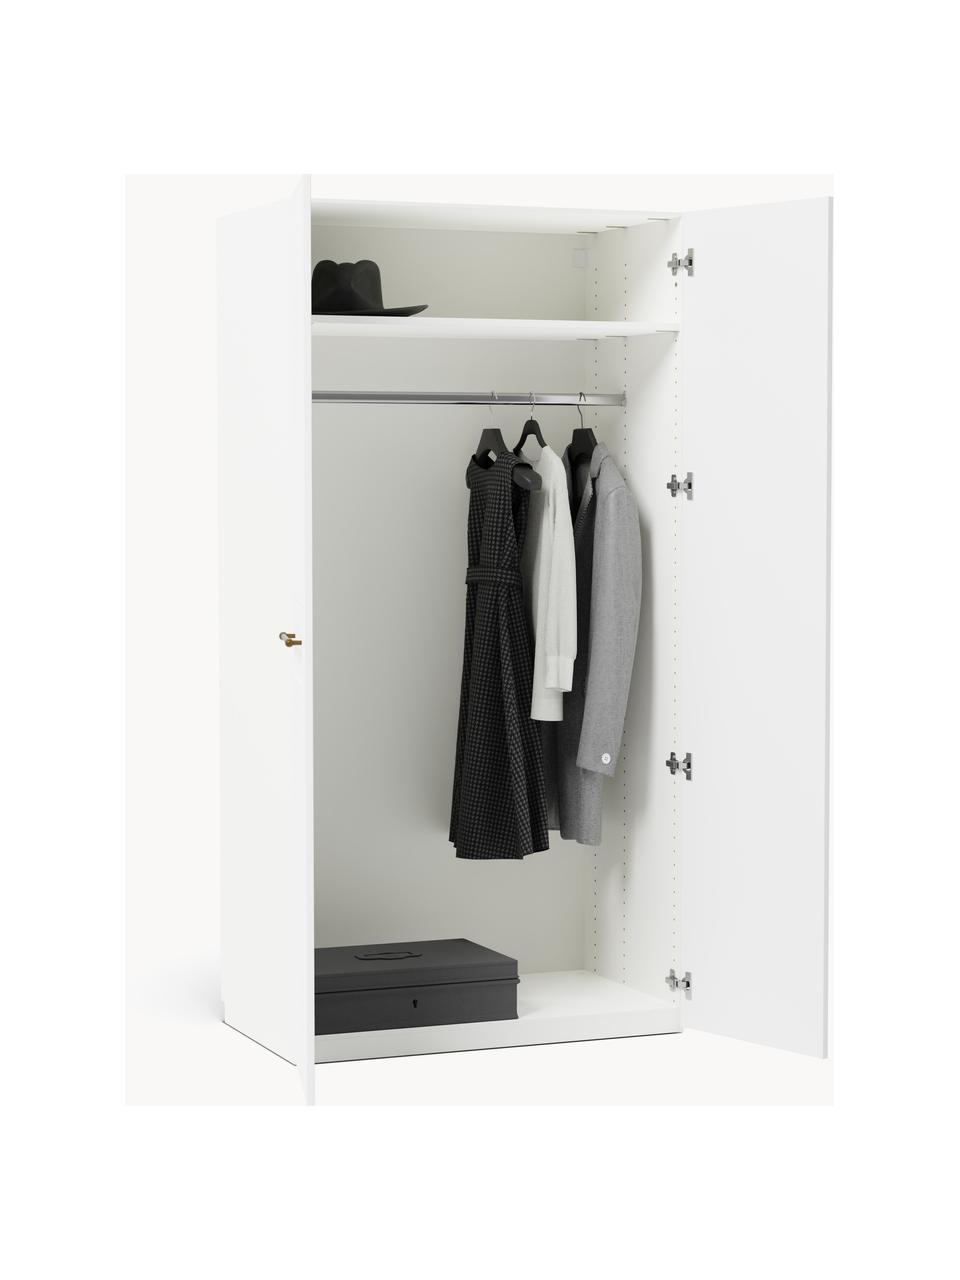 Modulární skříň s otočnými dveřmi Charlotte, šířka 100 cm, více variant, Bílá, Interiér Basic, Š 100 x V 200 cm